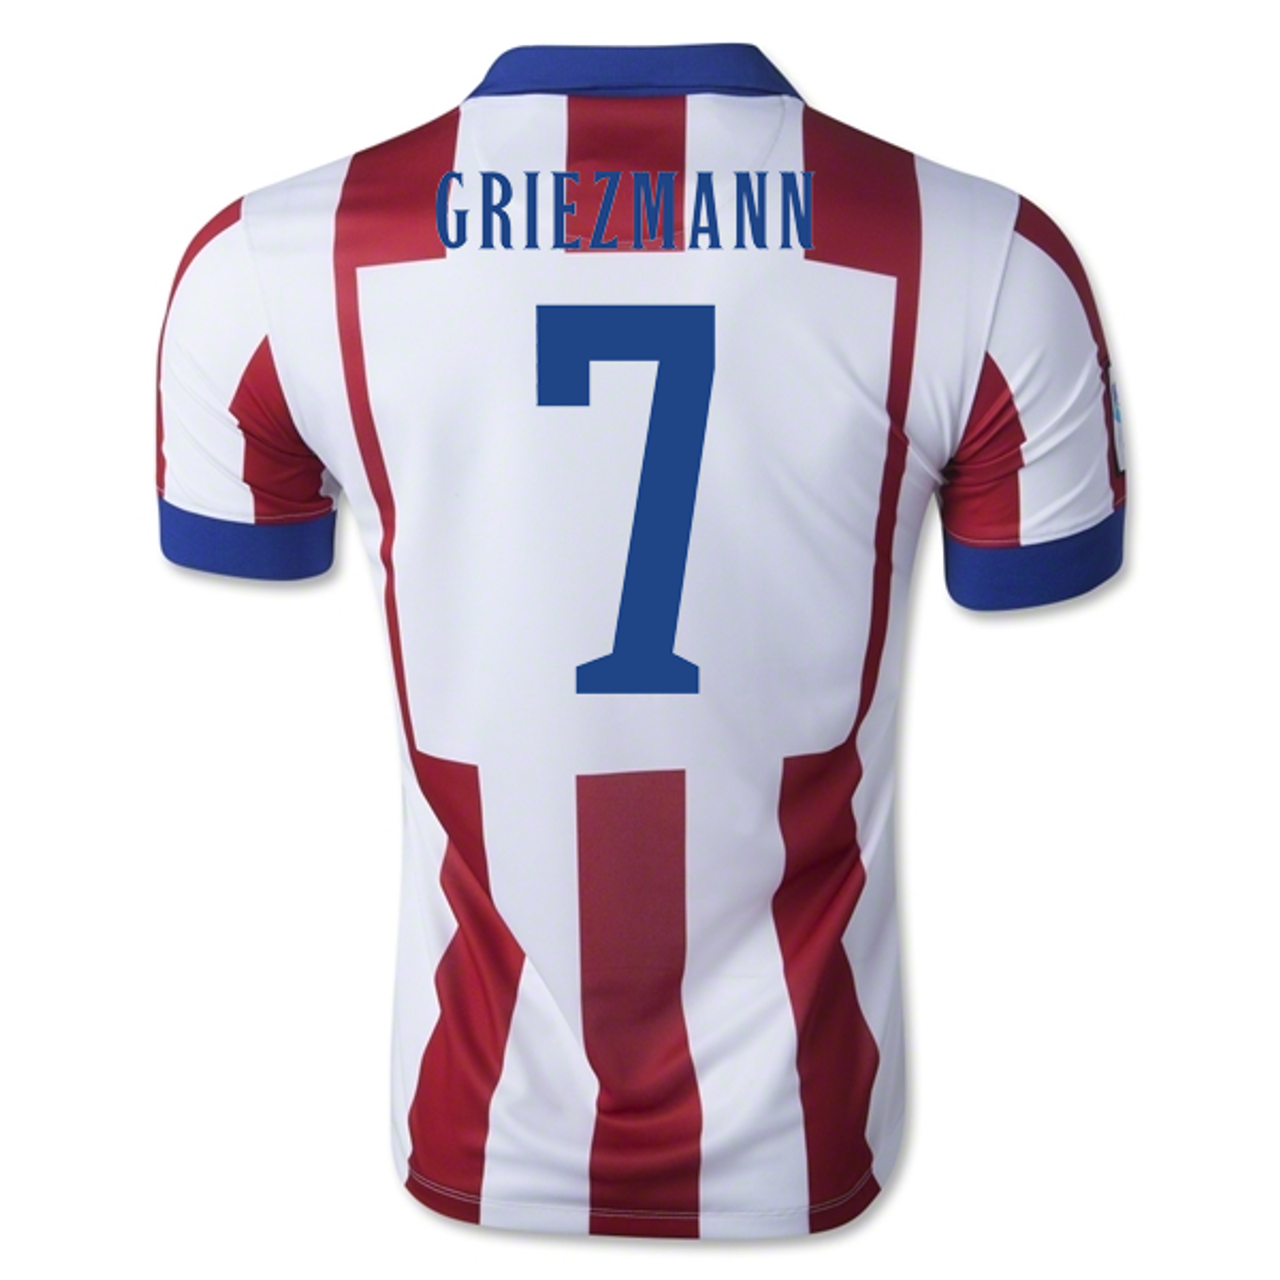 griezmann atletico madrid jersey